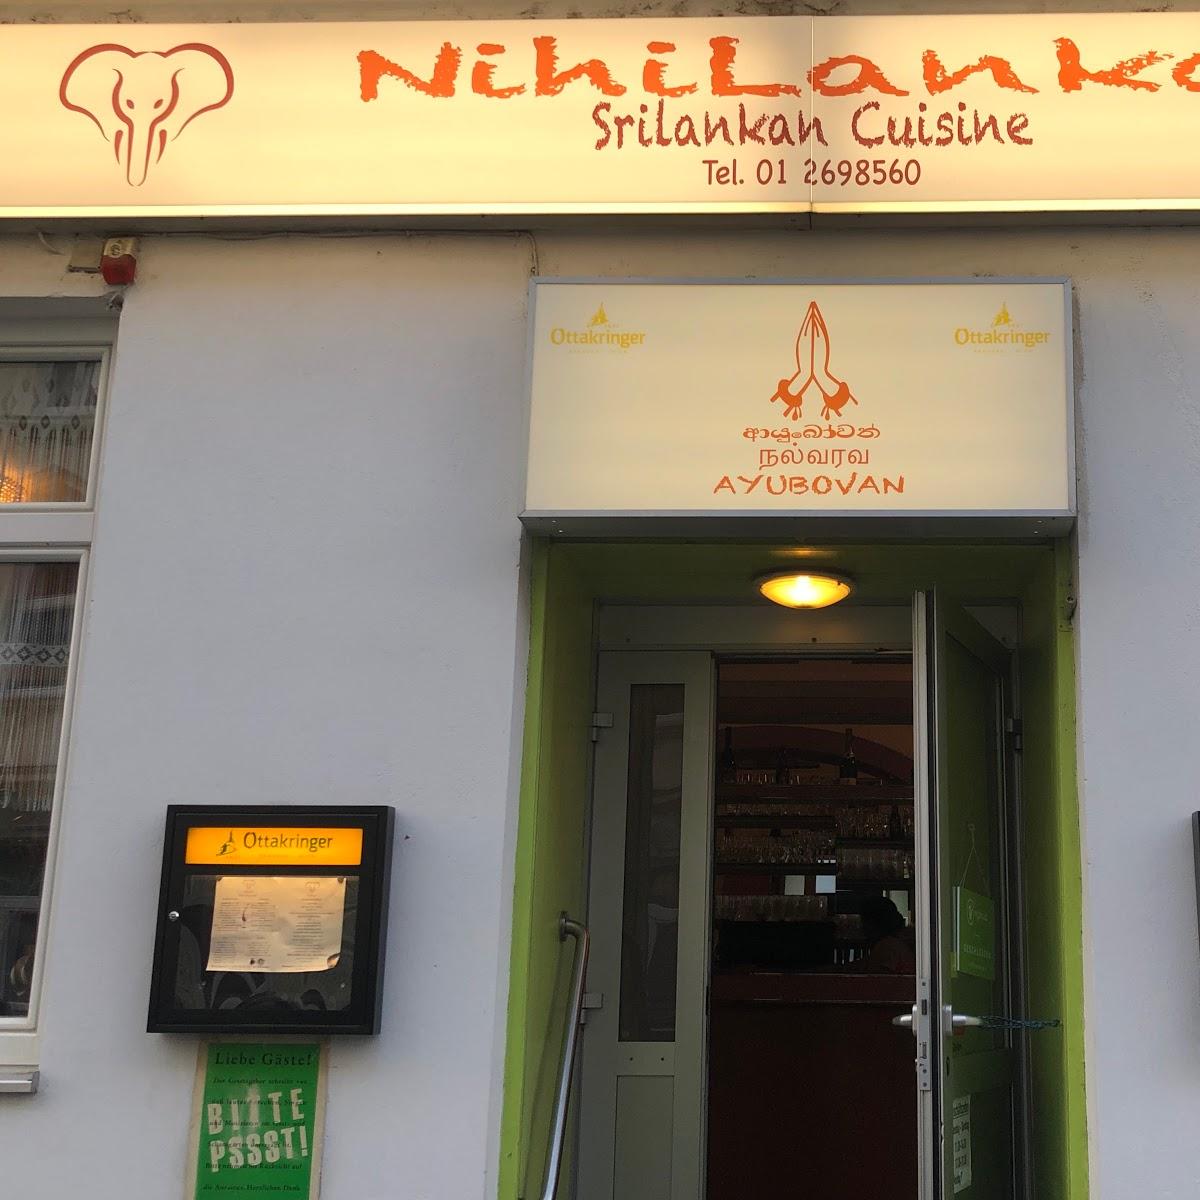 Restaurant "Nihi Lanka" in Wien